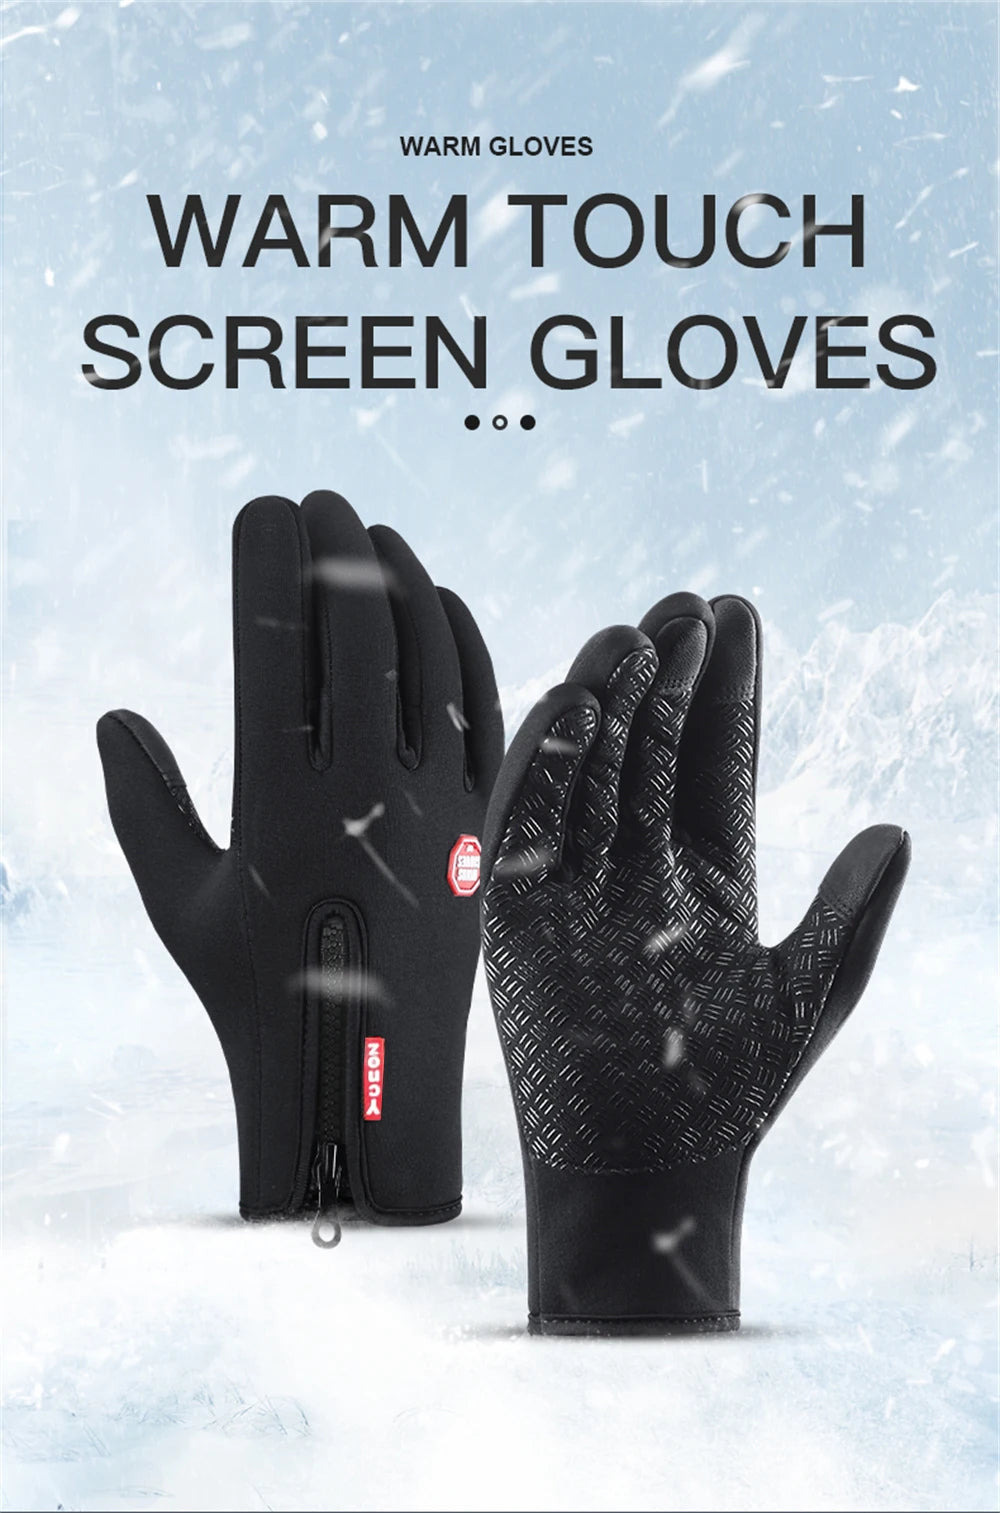 Waterproof Winter Gloves warm touch